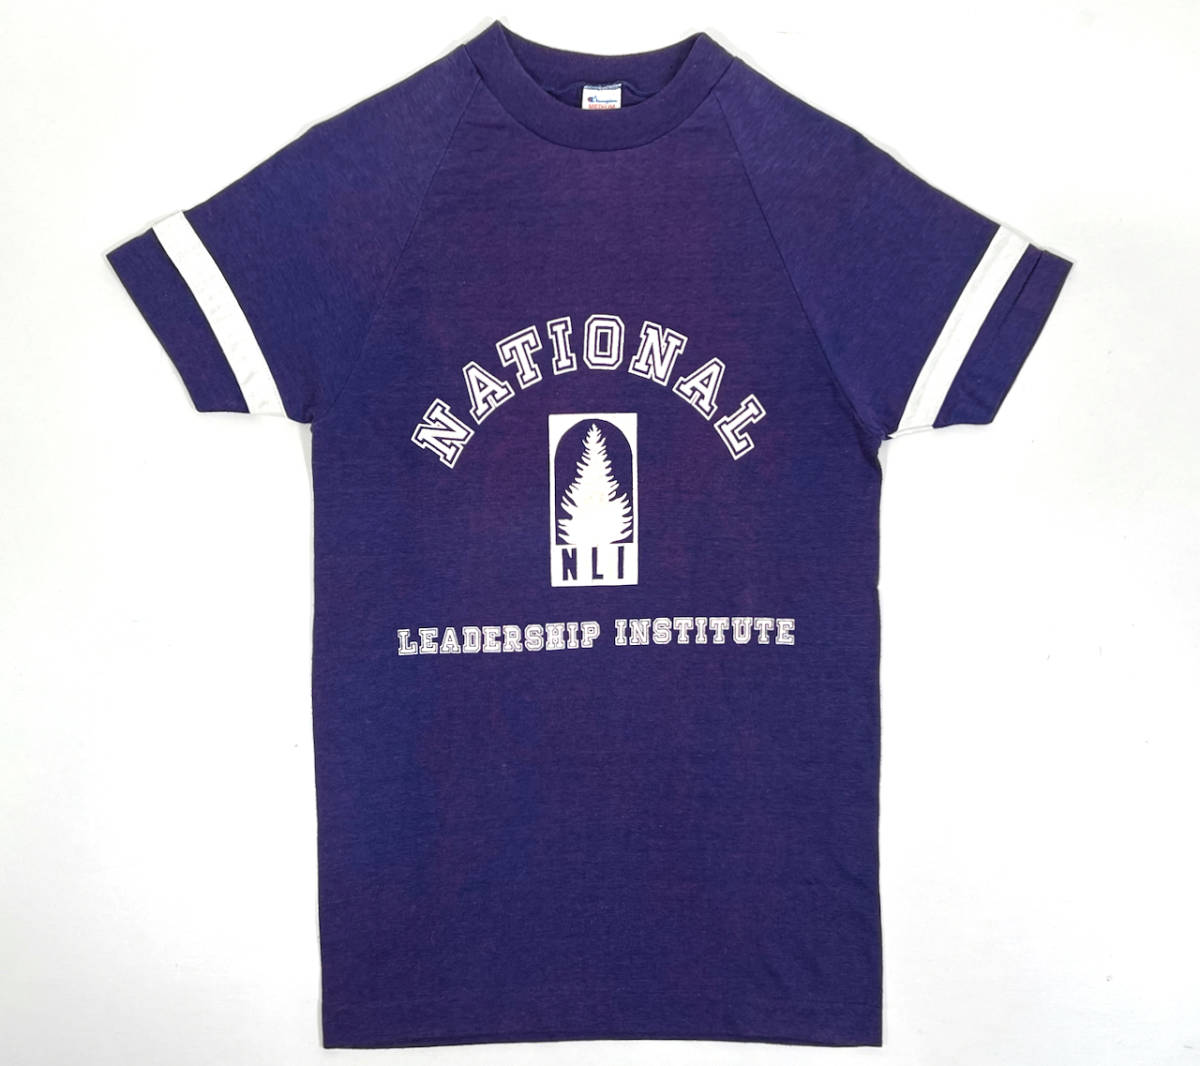 USA製 1980s CHAMPION NLI S/S Tee M Purple ヴィンテージチャンピオン 半袖Tシャツ 三段プリント パープル 紫 トリコタグ